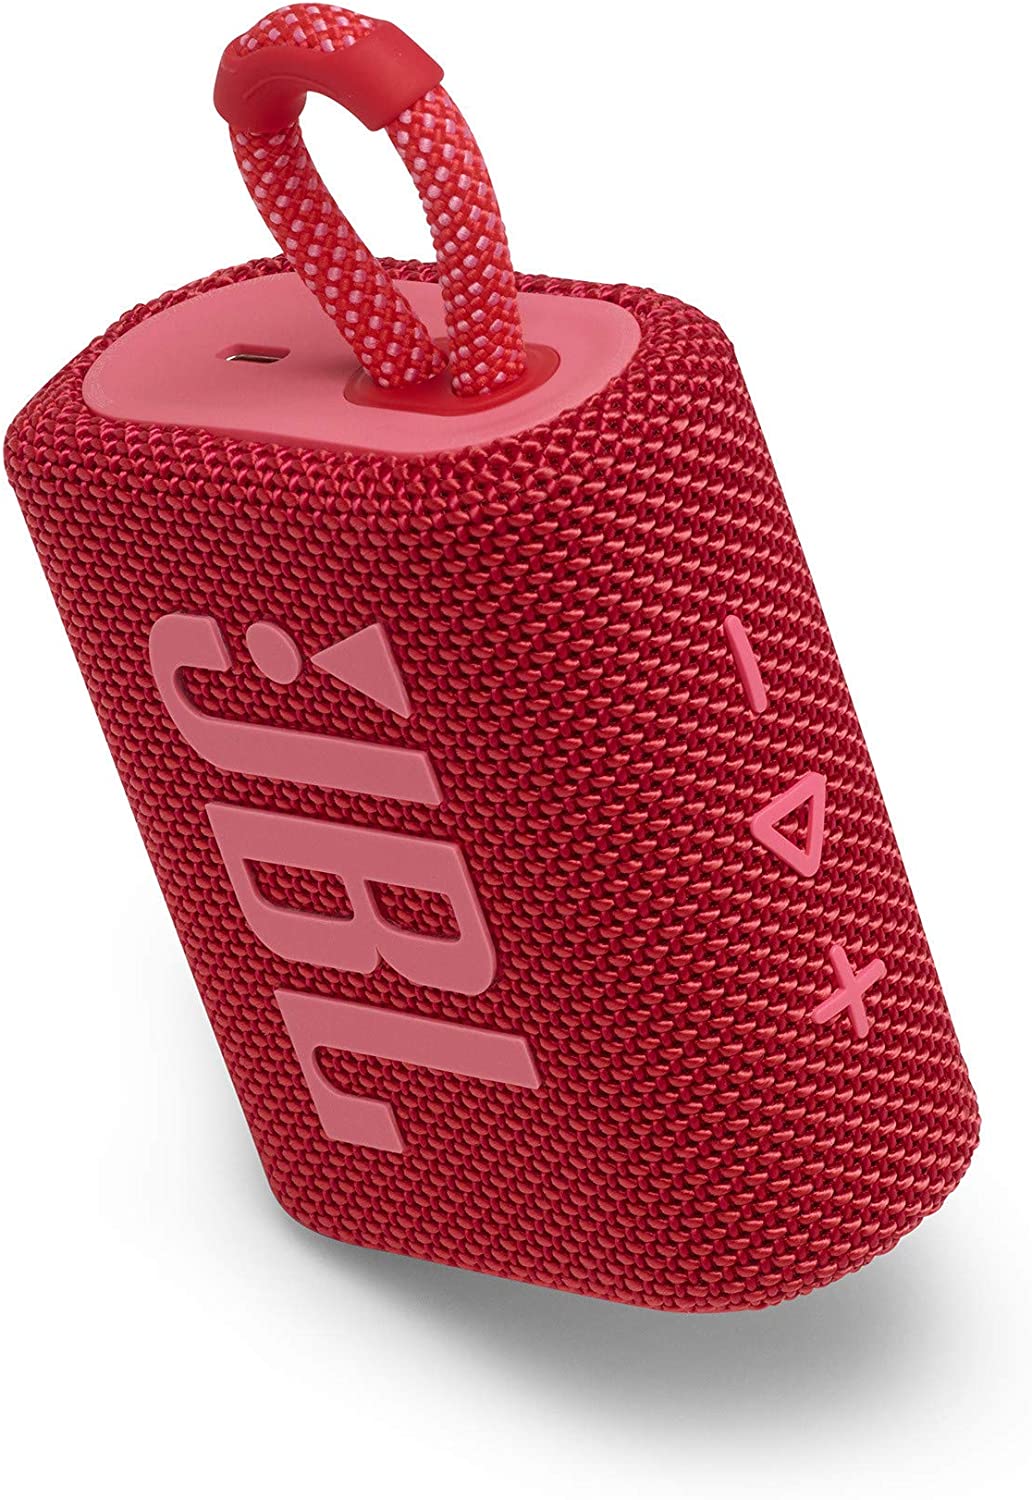 JBL GO 3 Bluetooth Speakers (Red)